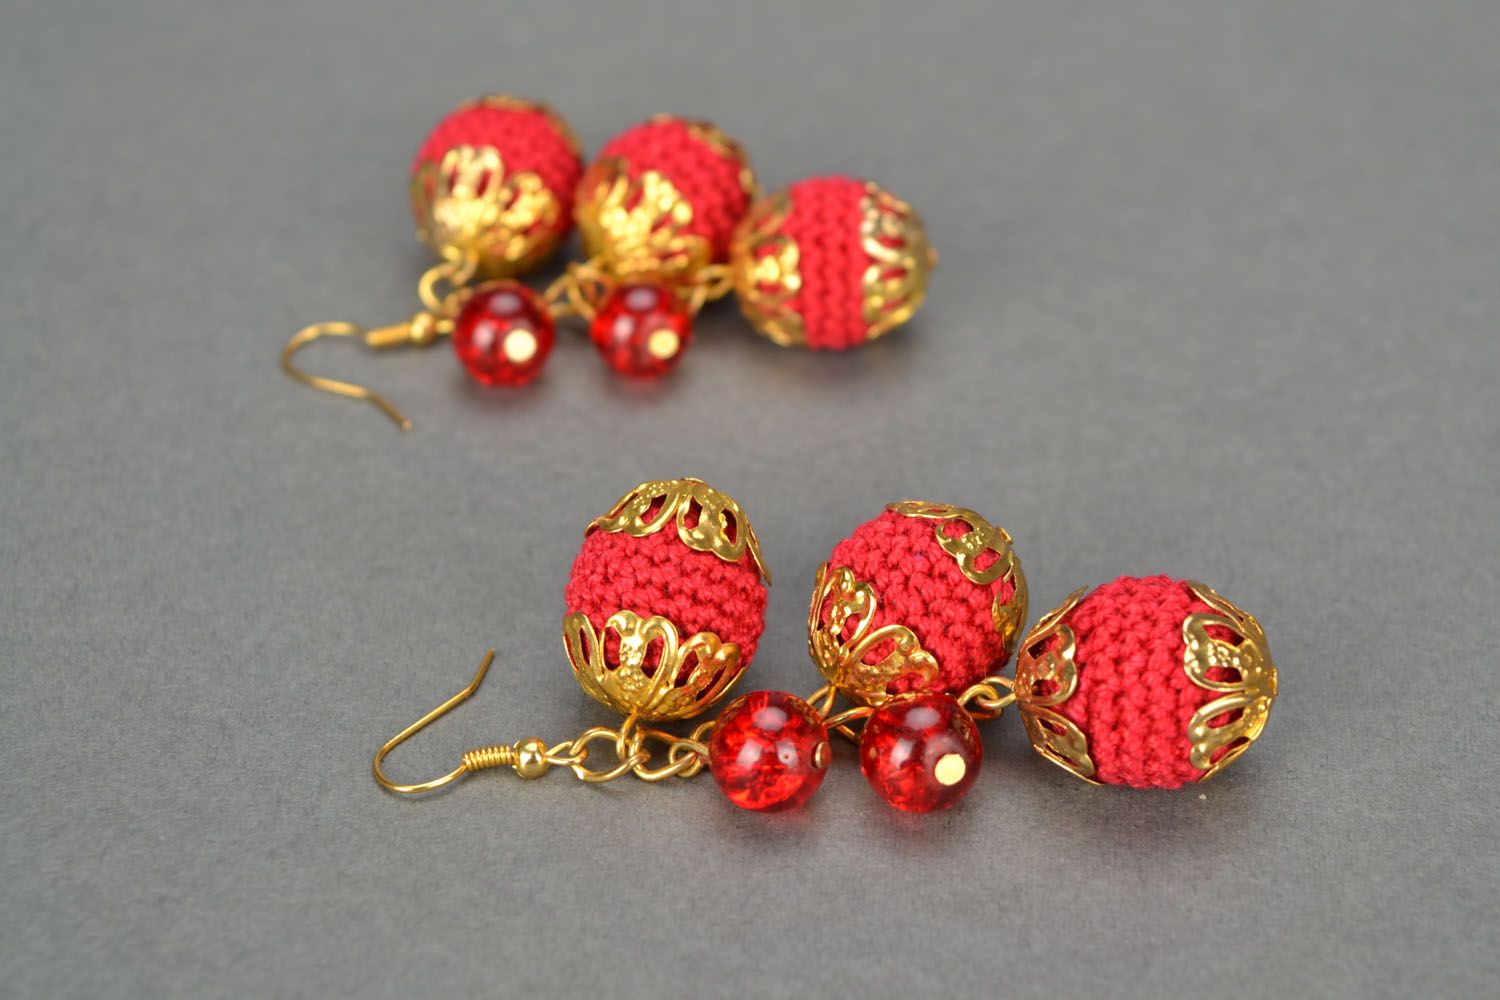 Crochet earrings with charms Cherry Glamor photo 1